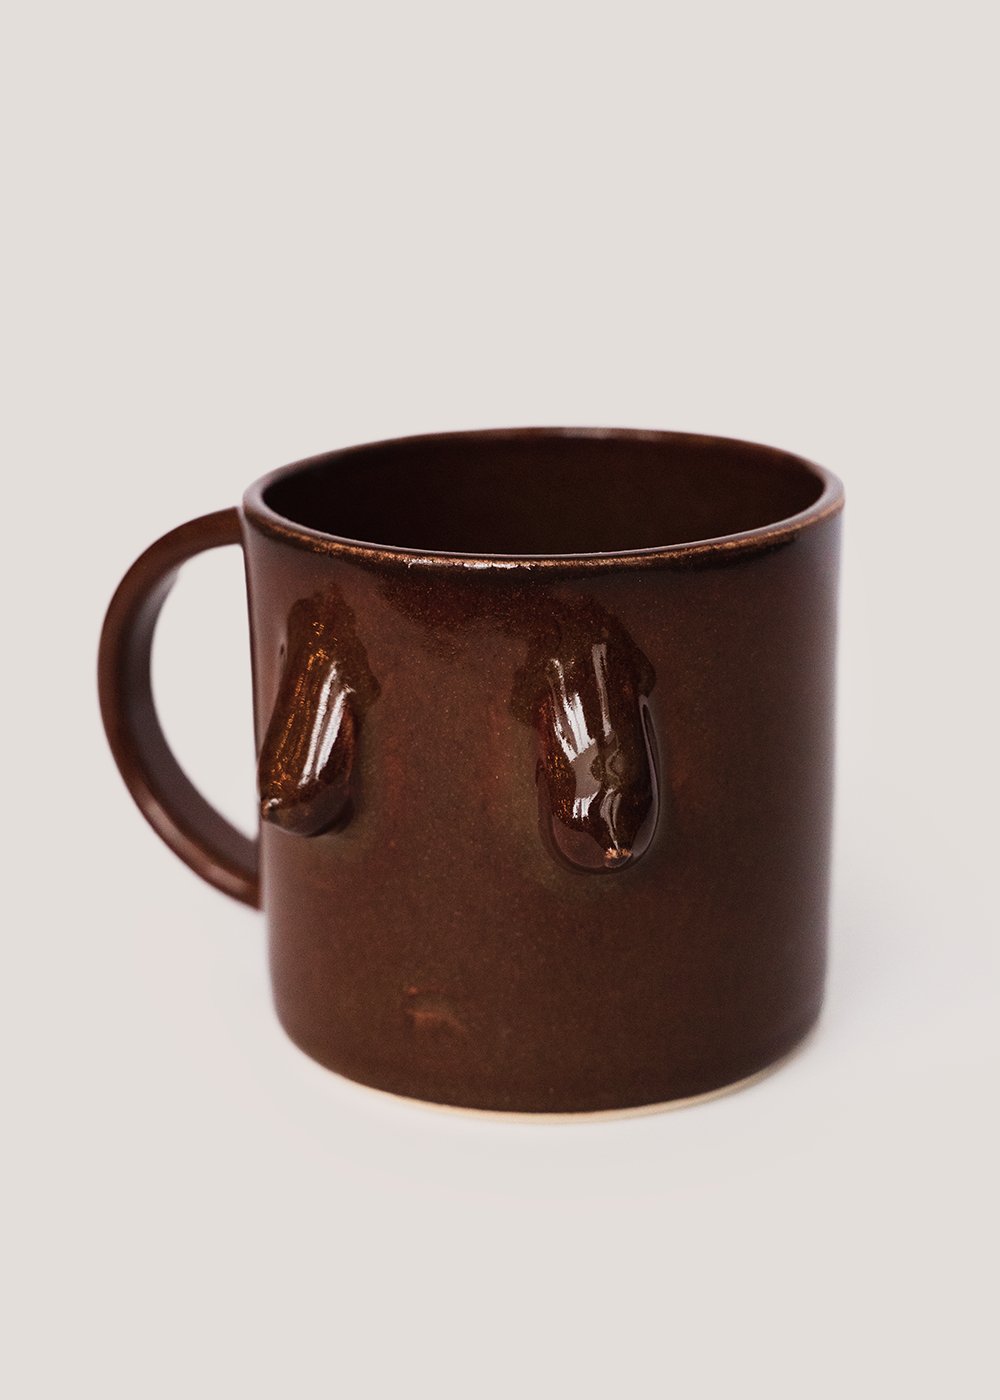 Boob Definition Mug – Bloody Good Mugs